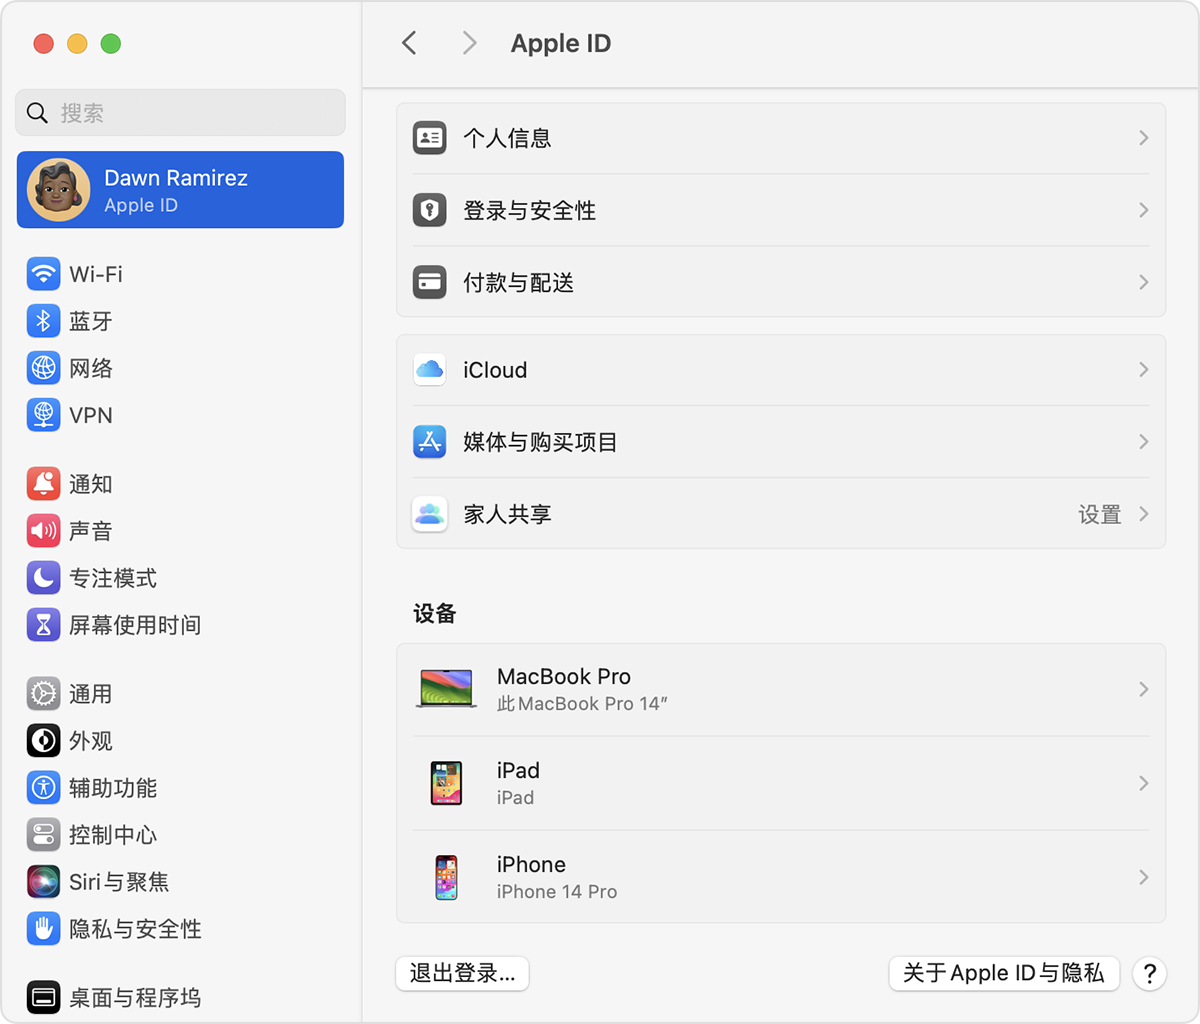  macOS Sonoma， System settings, Apple ID, device list